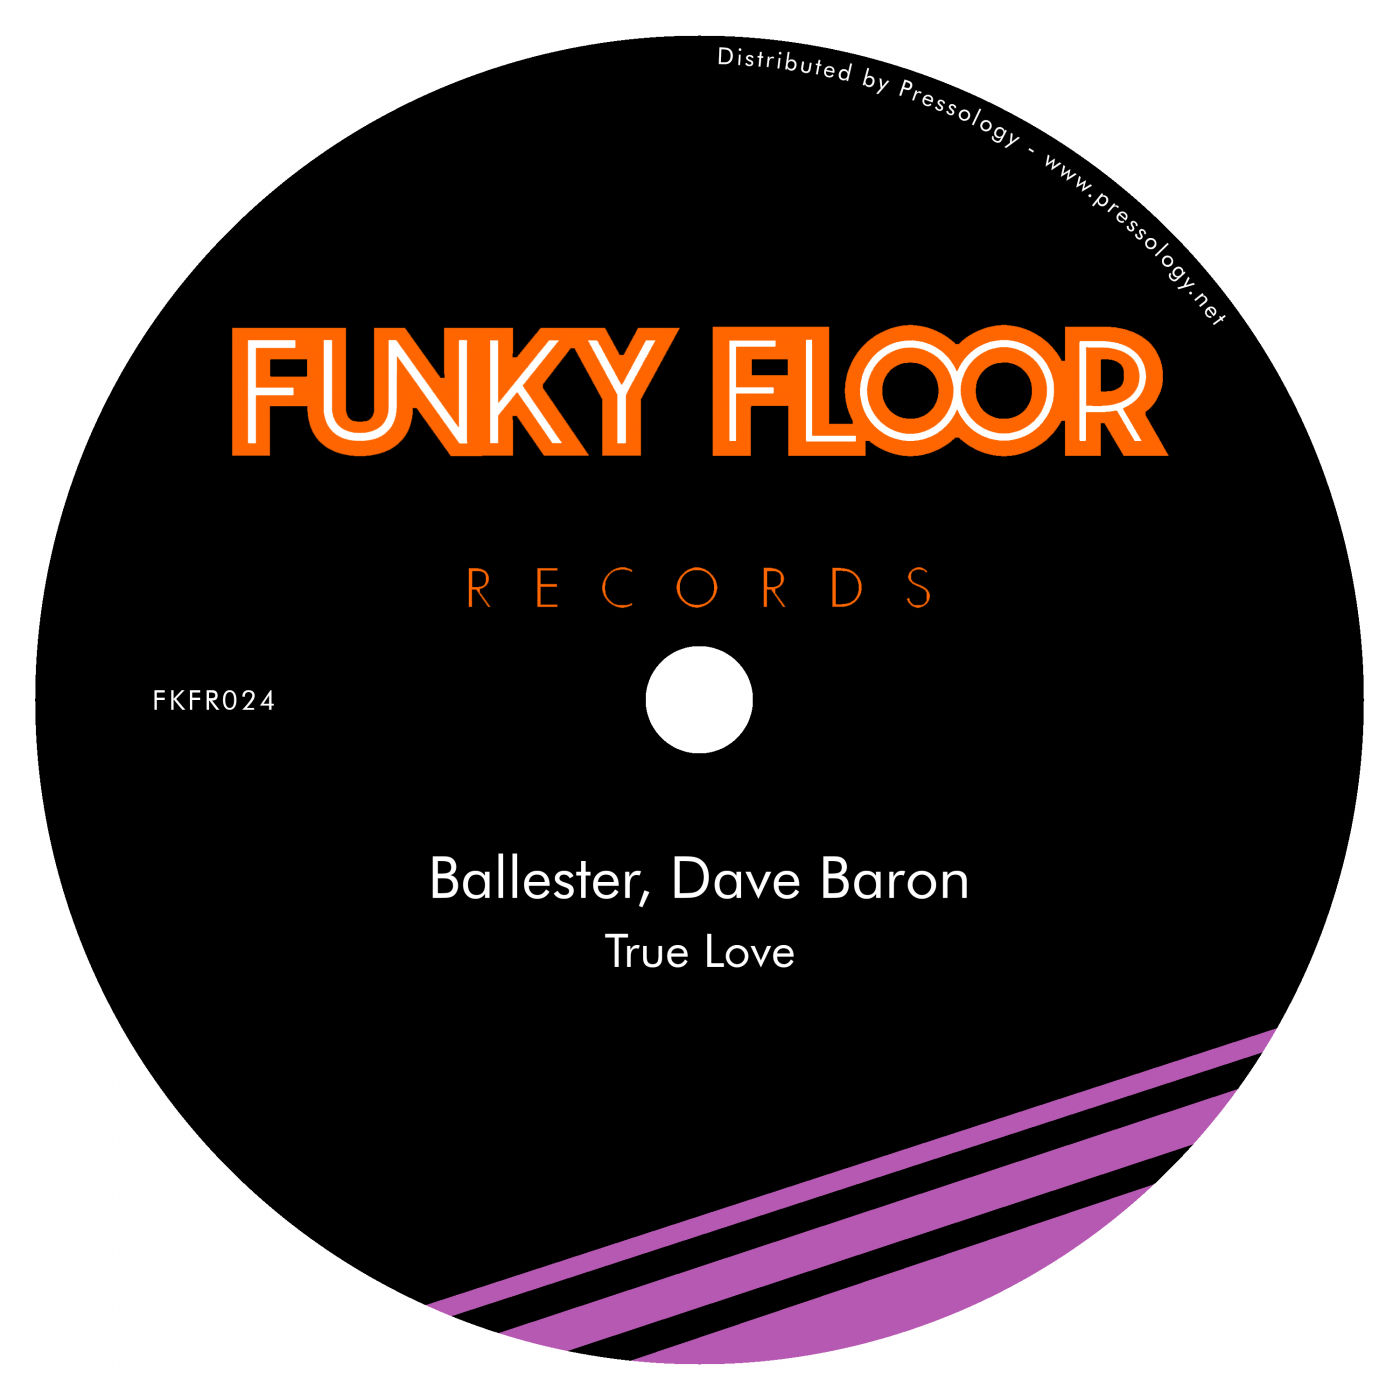 Ballester, Dave Baron - True Love / Funky Floor Records